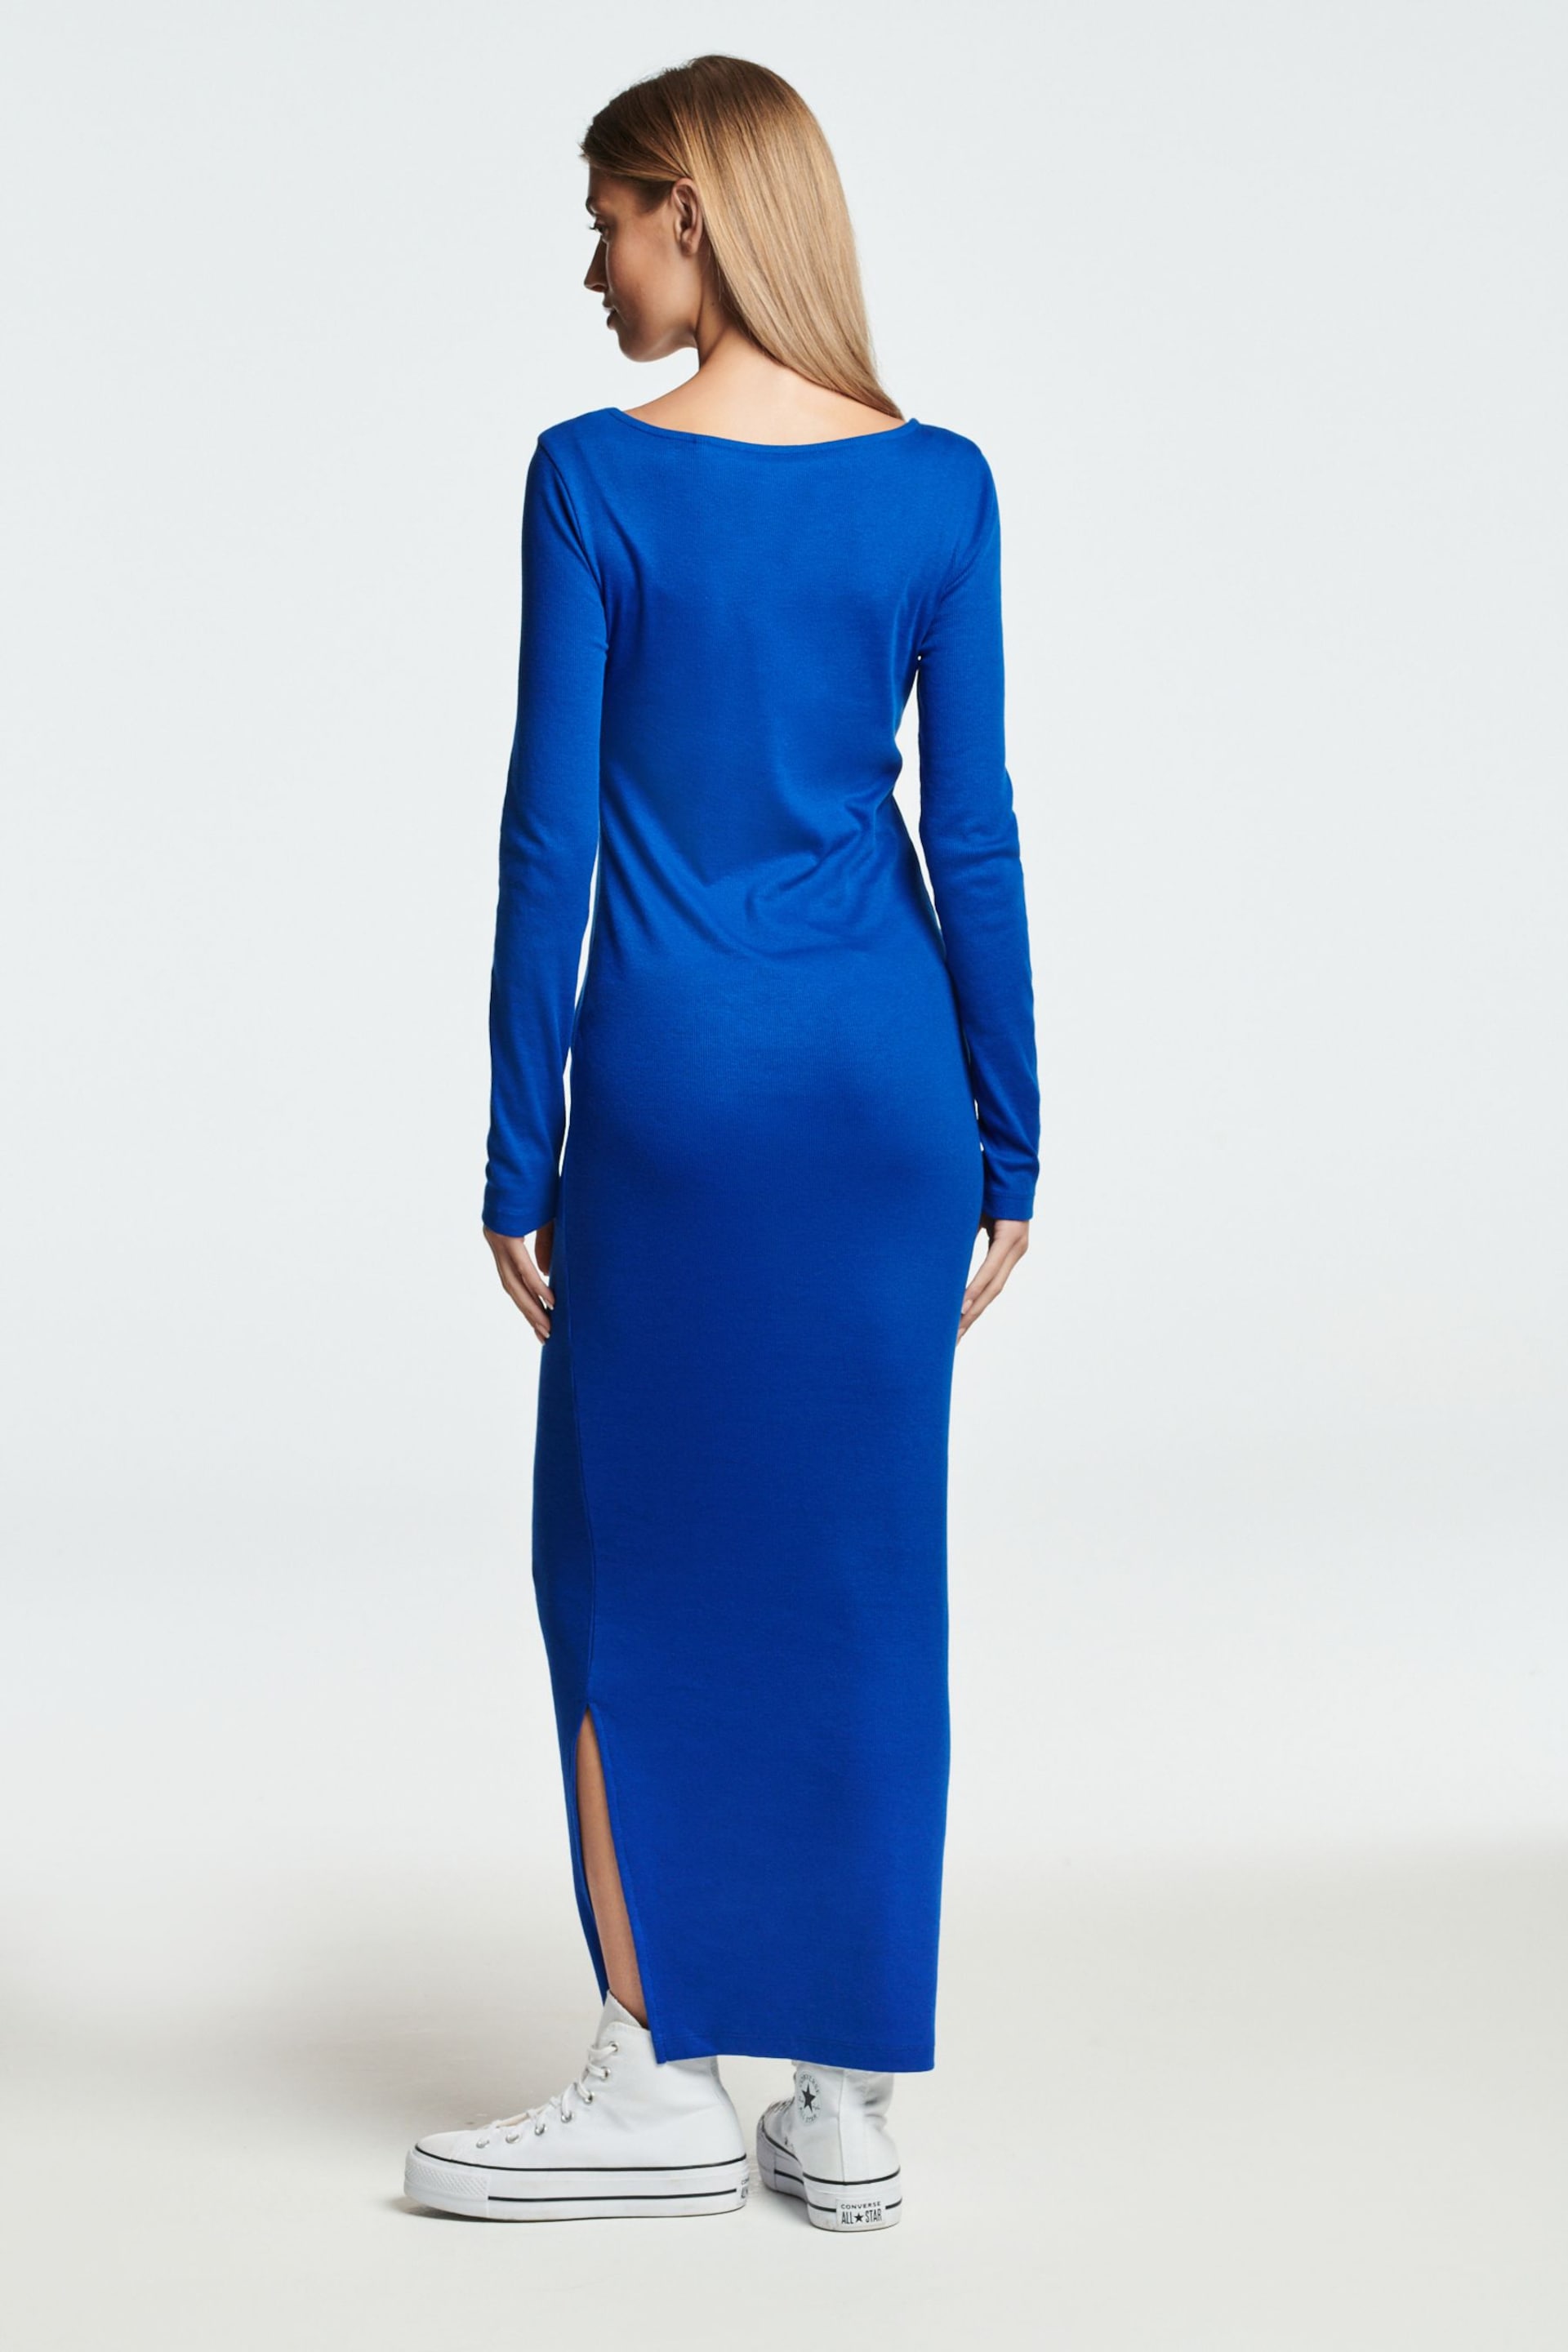 Cobalt Blue Scoop Neck Long Sleeve Ribbed Midaxi Dress - Image 2 of 6